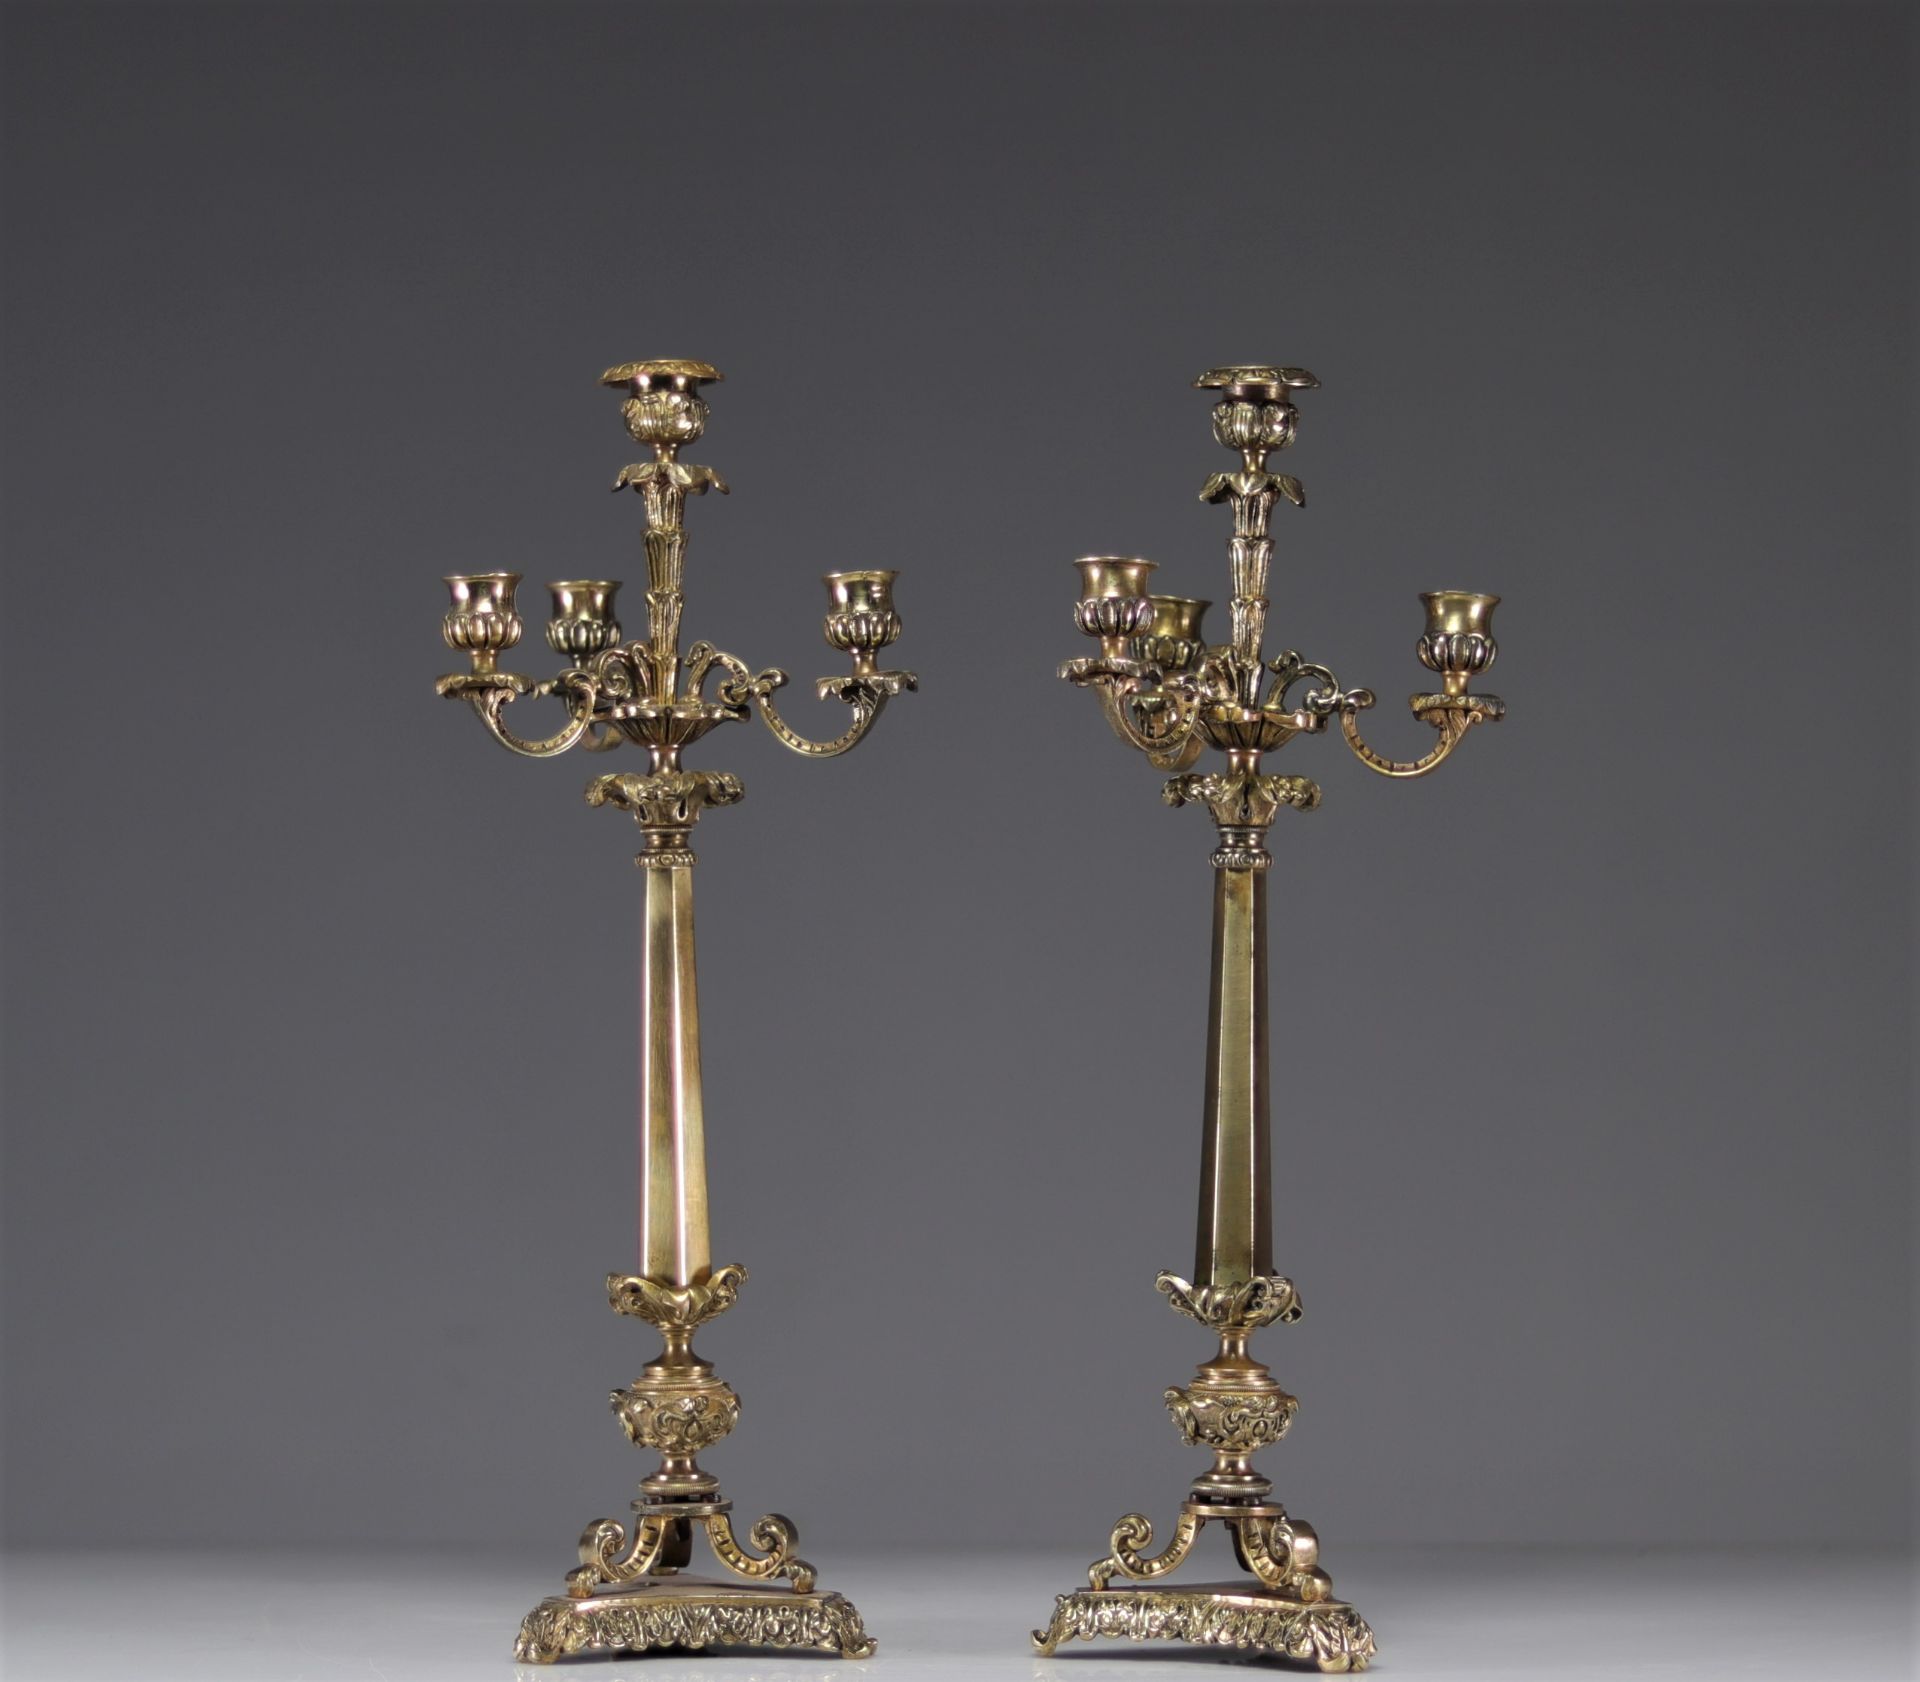 19th century pair of bronze candelabra - Image 2 of 3